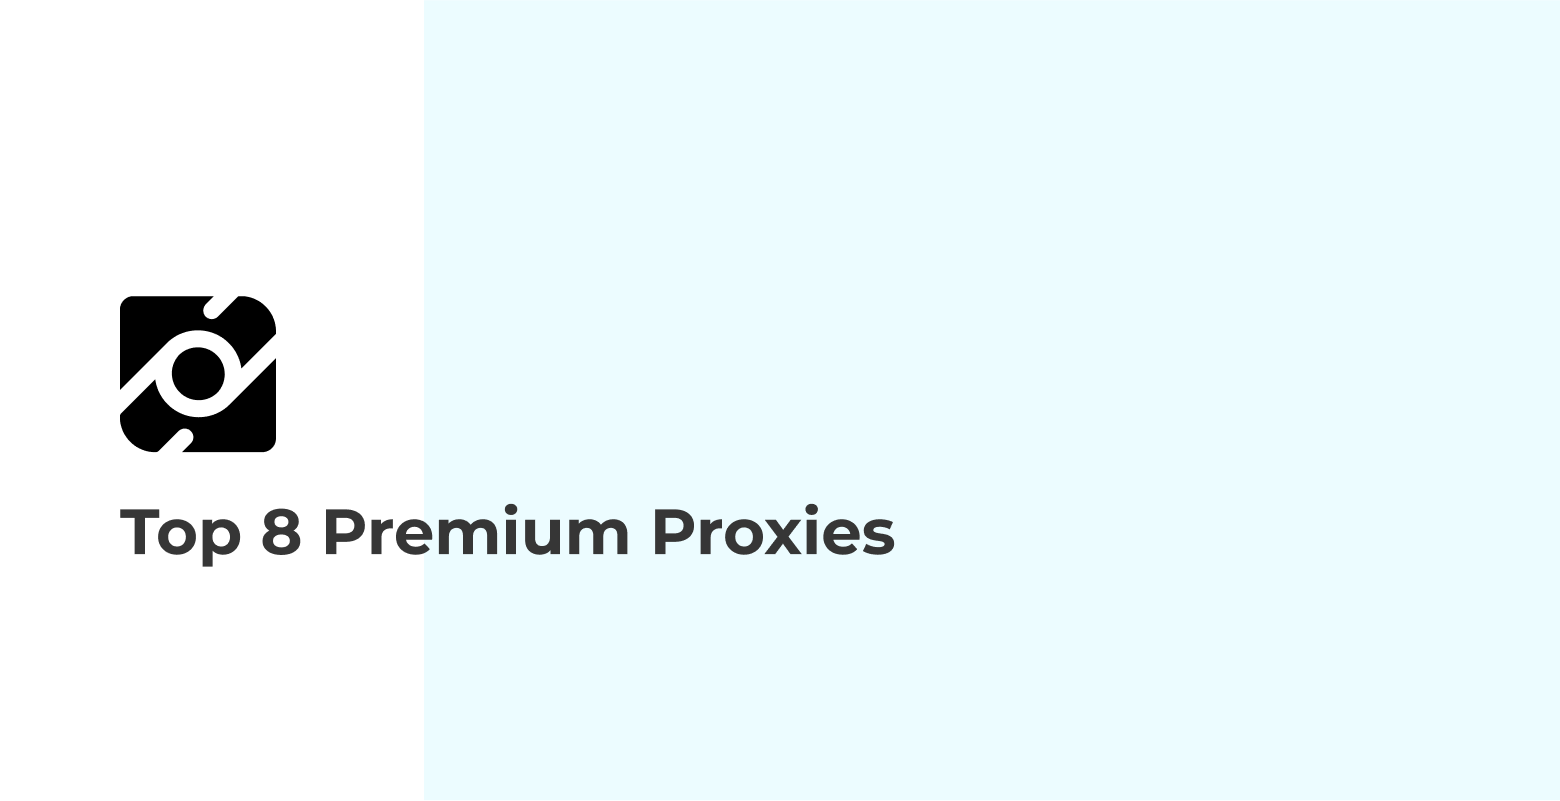 Top 8 Premium Proxies